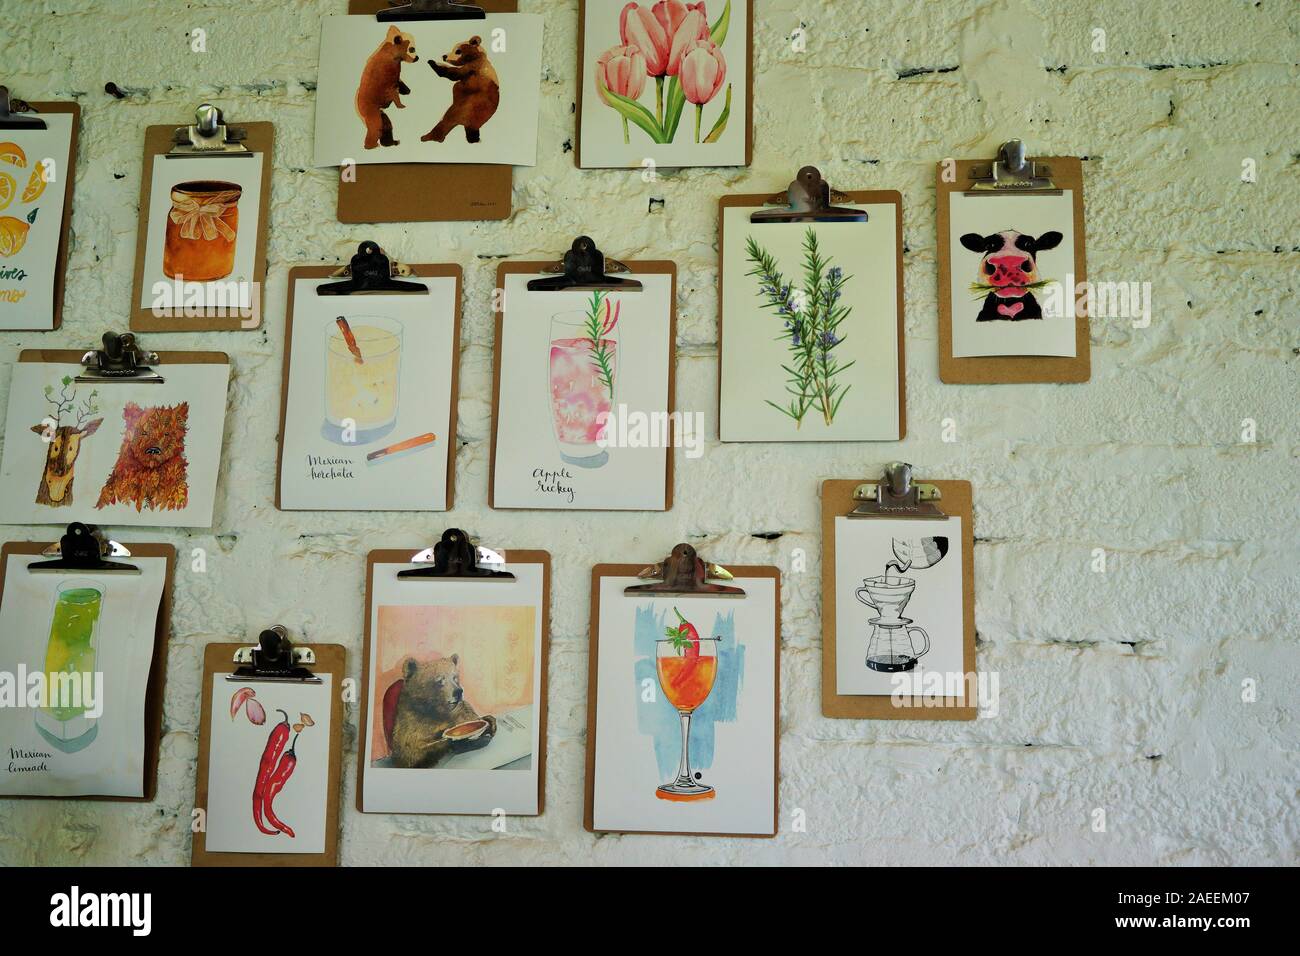 Wall Art, Big Bear Cafe, terreno alternativo, Manali, Himachal Pradesh, India, Asia Foto Stock